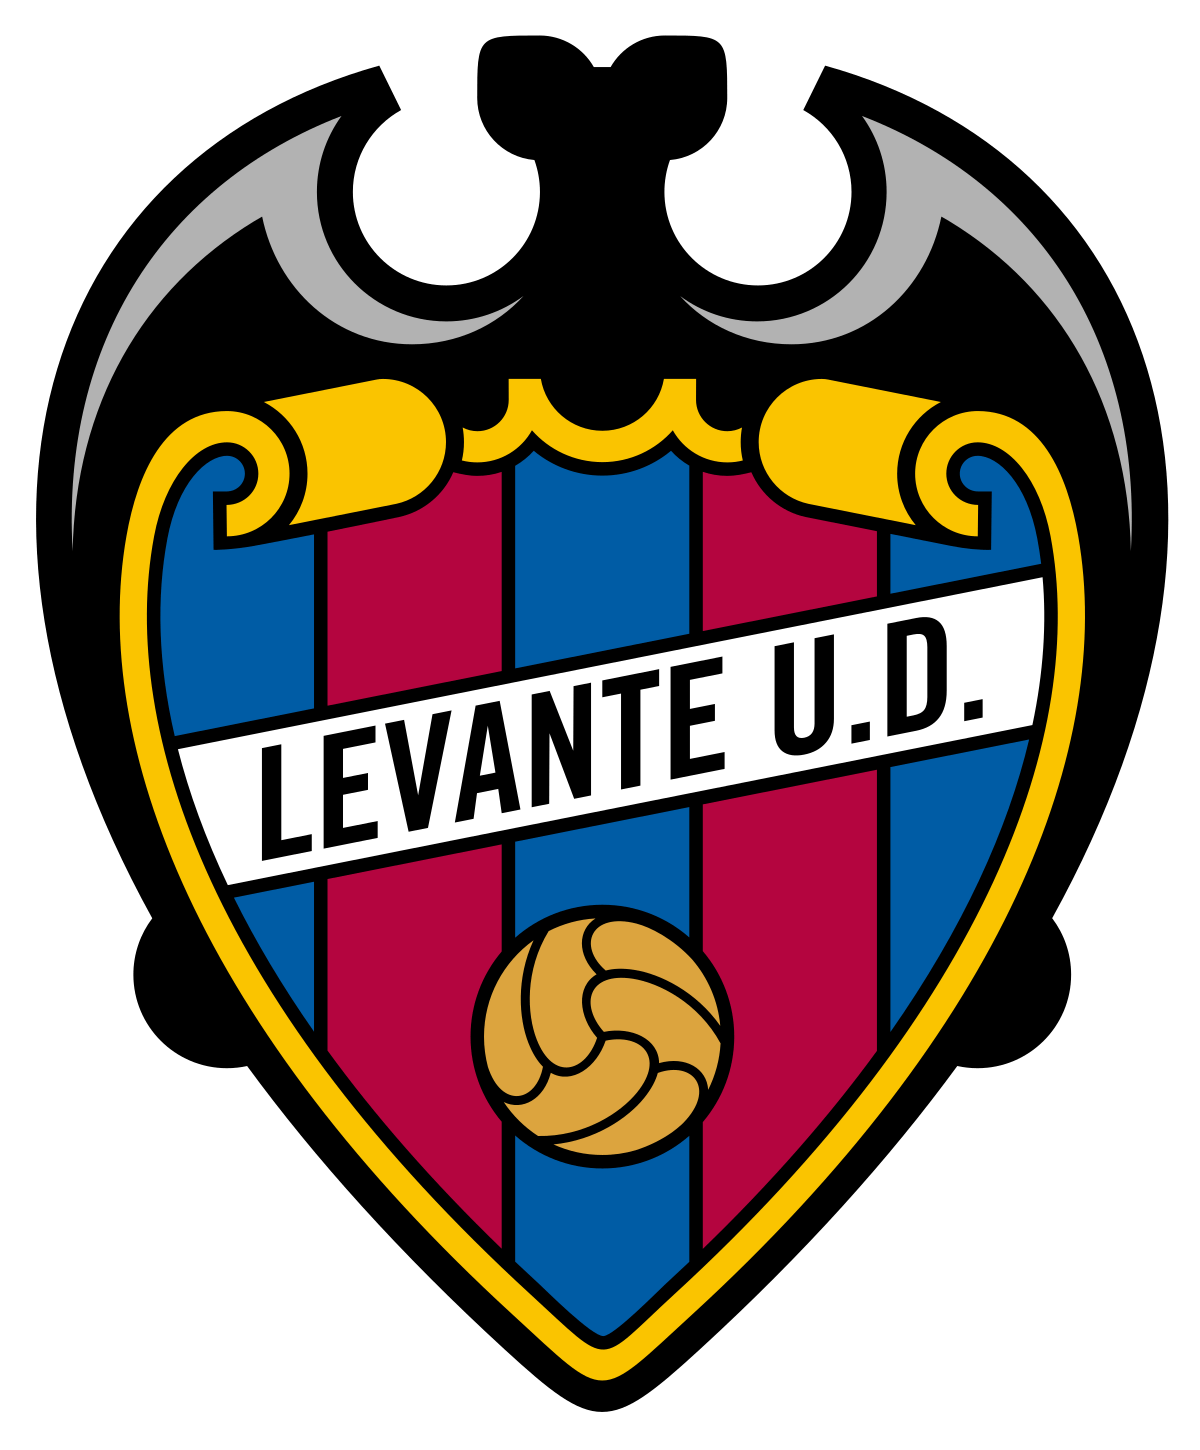 Old Ud Logo - Levante UD